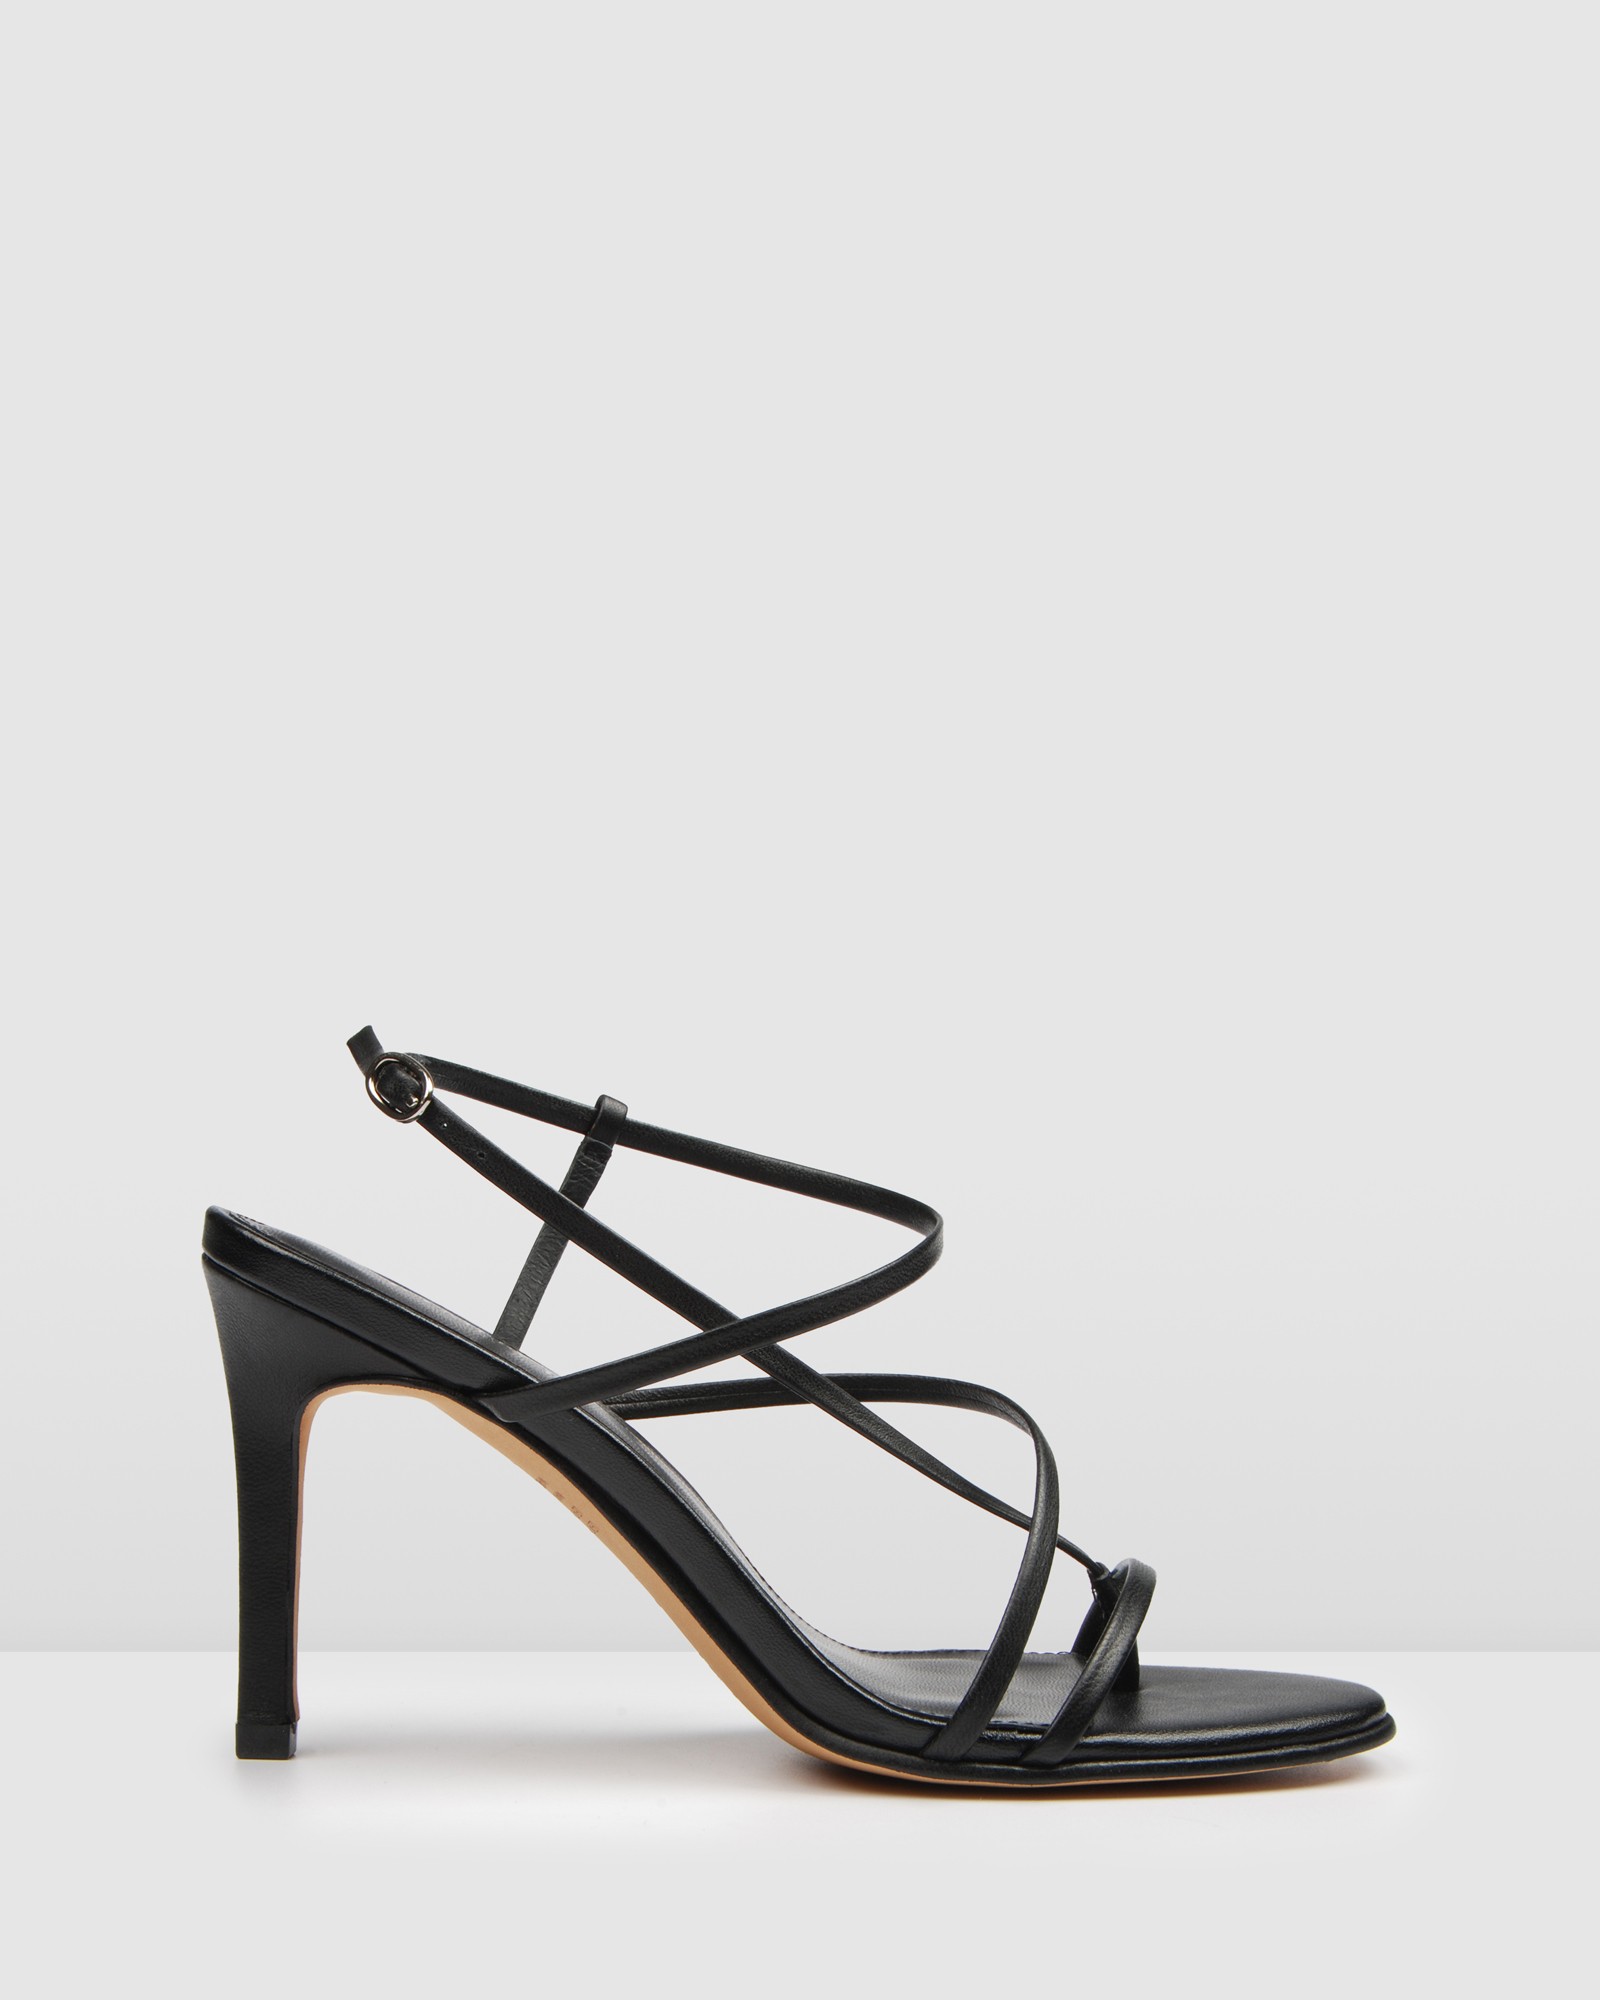 Stella High Heel Sandals Black Leather by Jo Mercer | ShoeSales